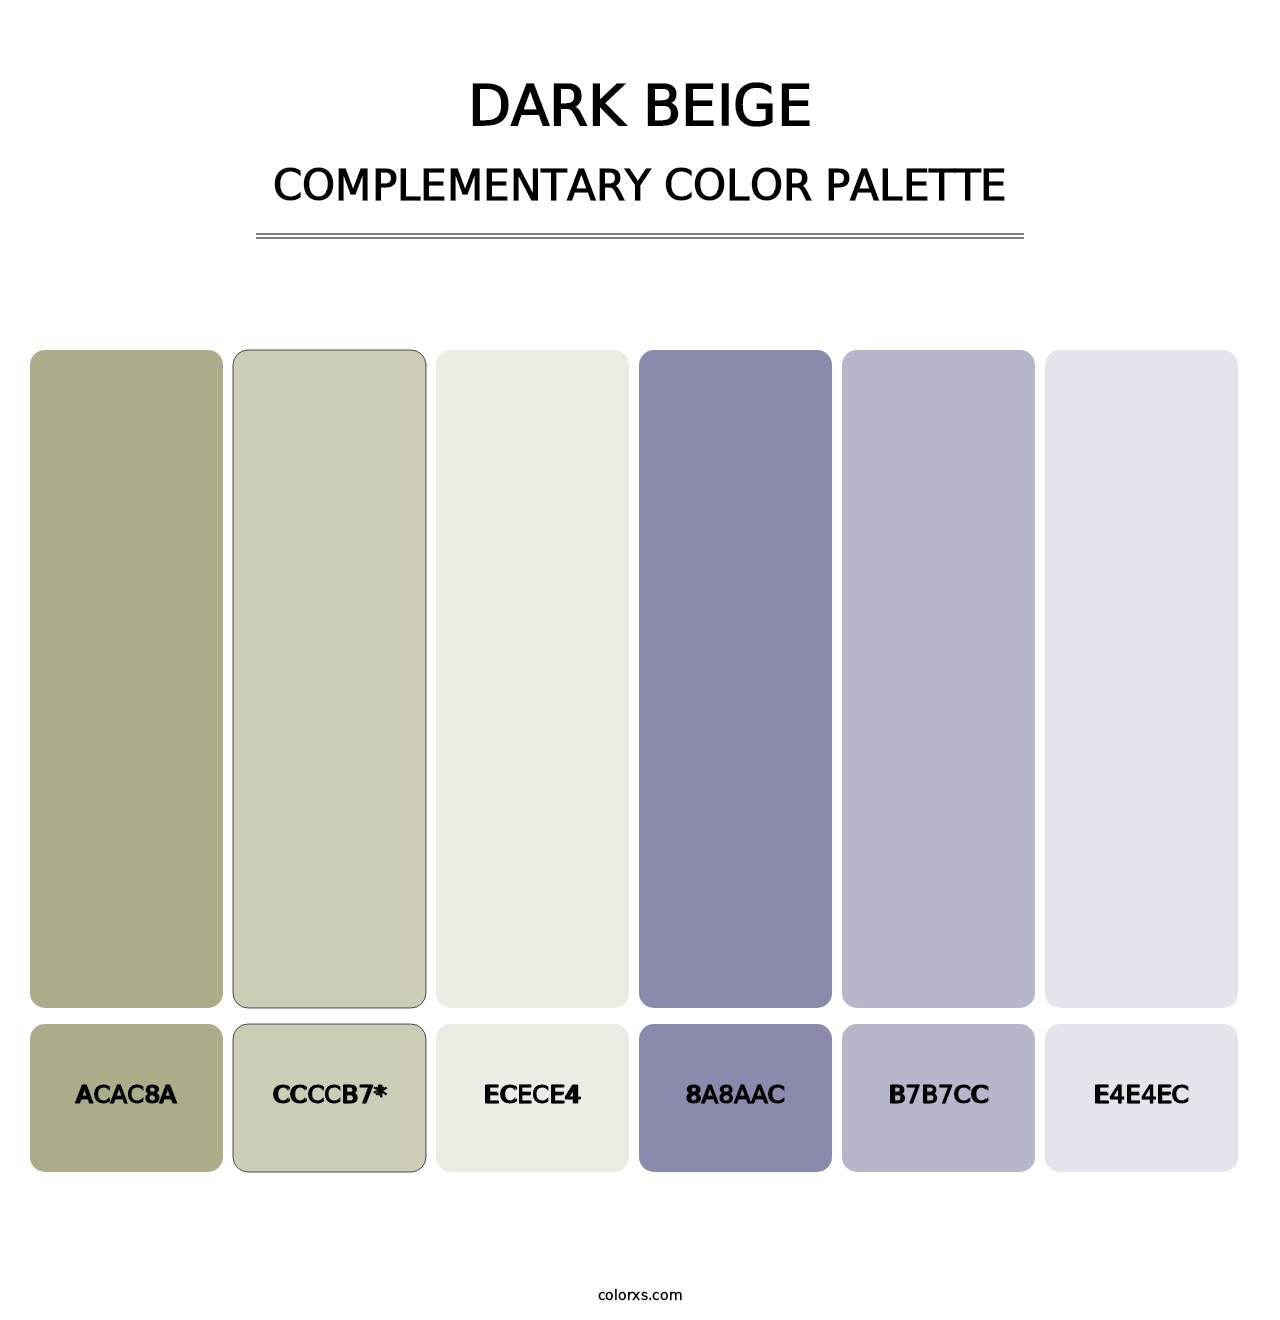 Dark Beige - Complementary Color Palette